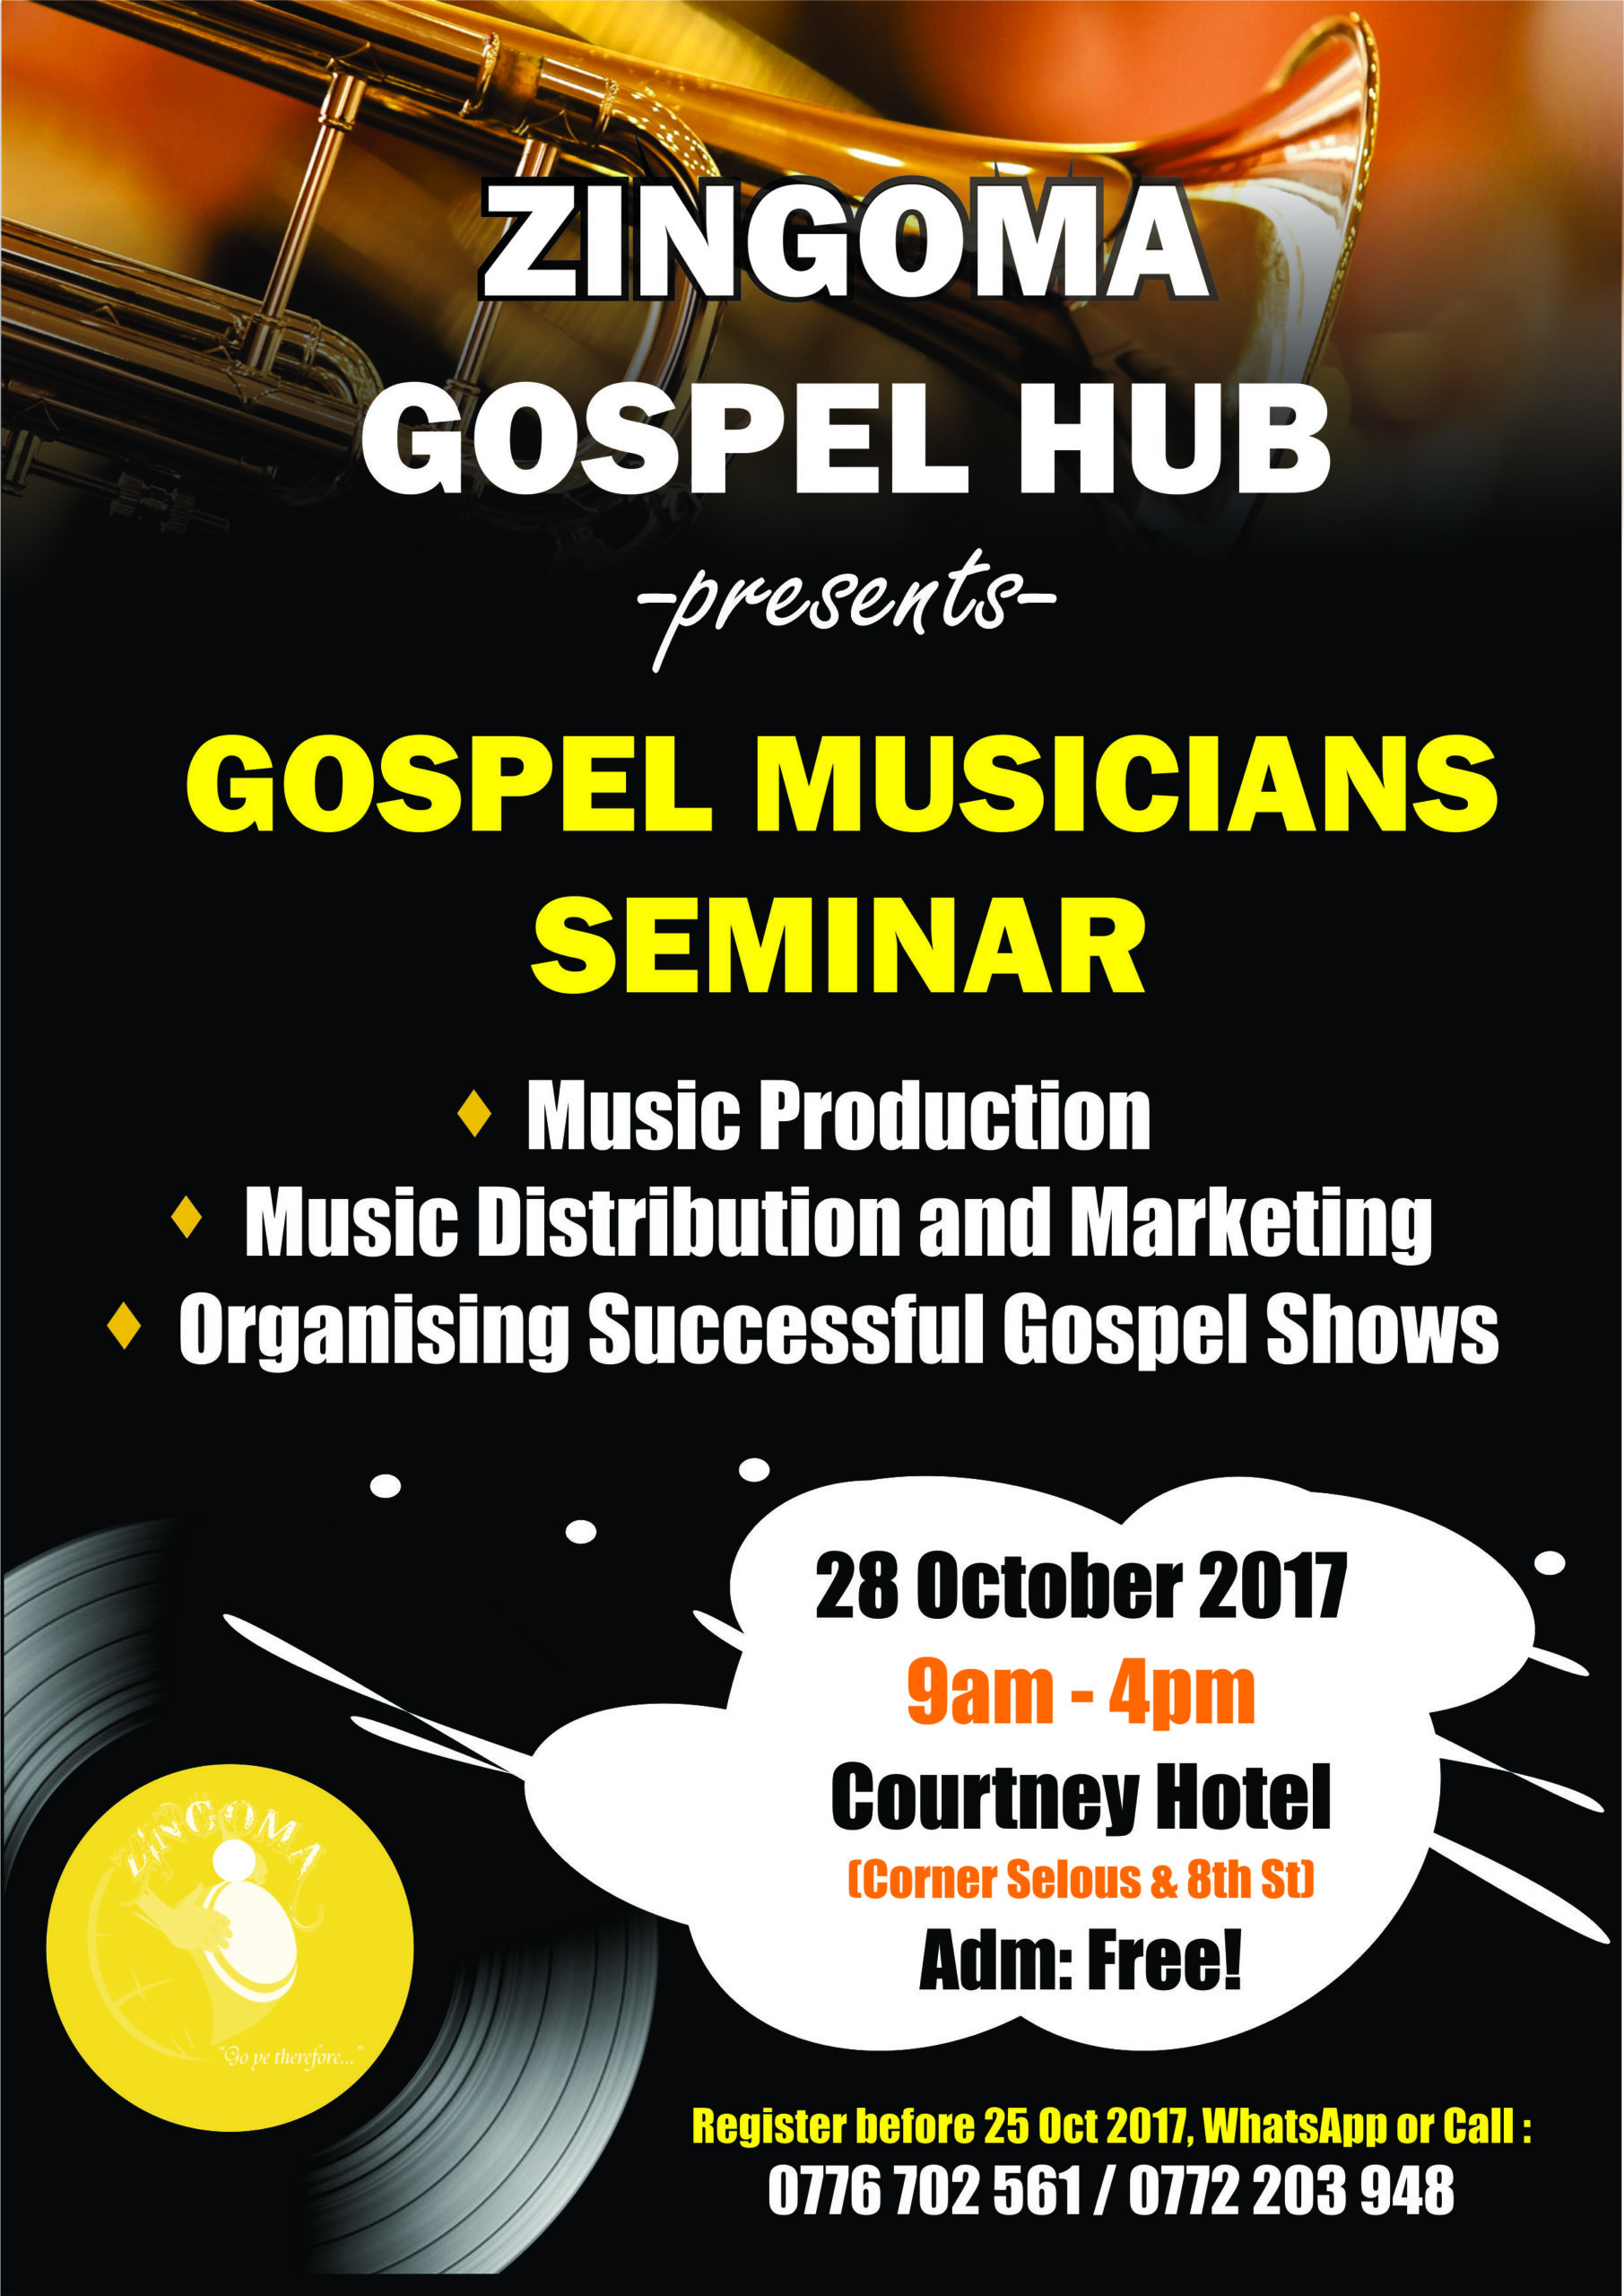 Gospel musicians seminar set for end of October